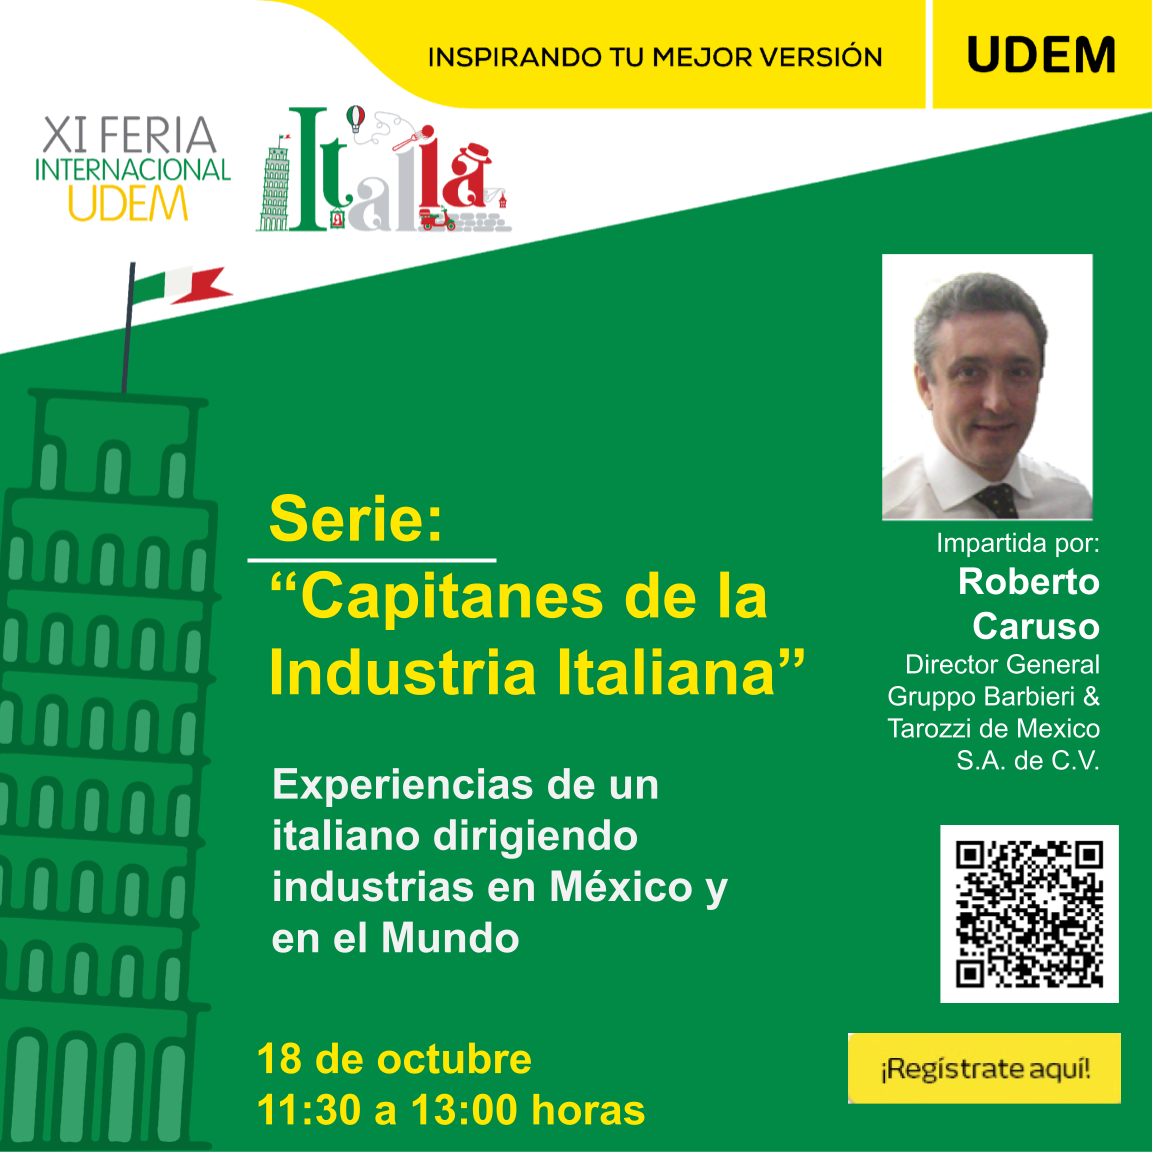 Serie Capitanes de la Industria Italiana con Roberto Caruso, Feria Internacional UDEM: Italia